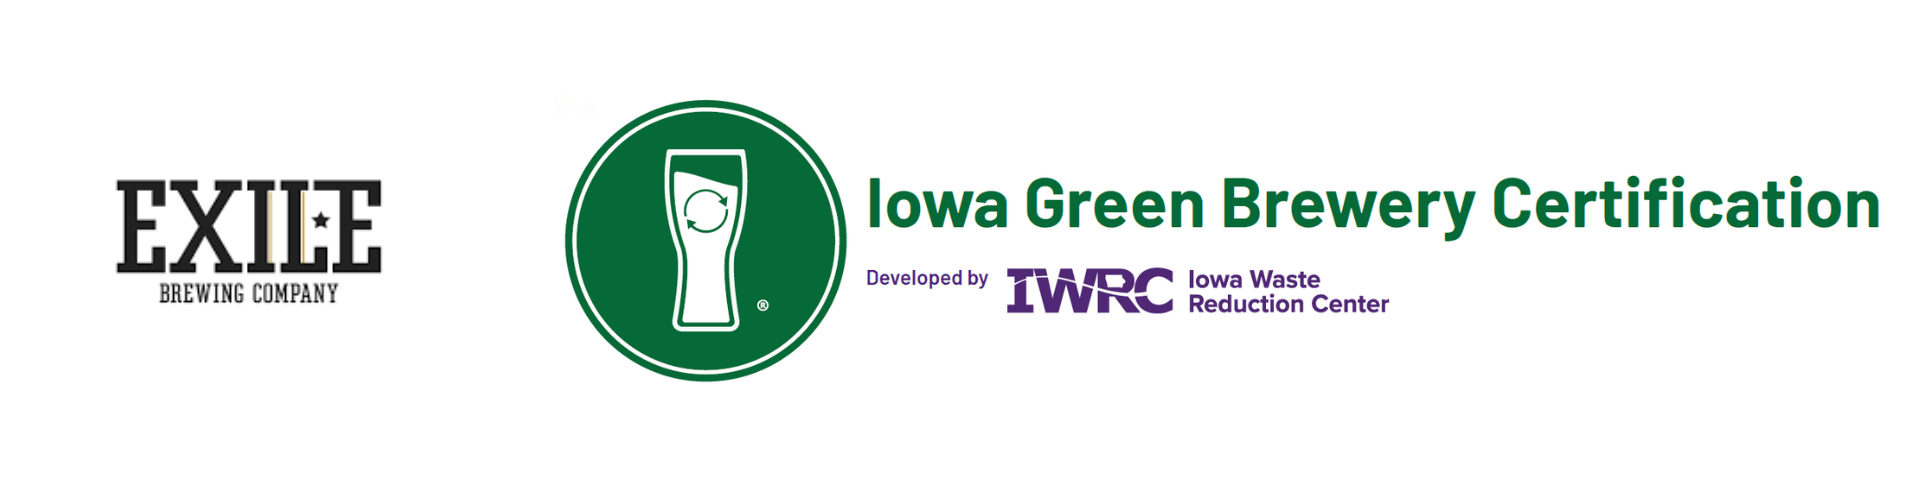 EXILE logo and Iowa Green Brewery program logo